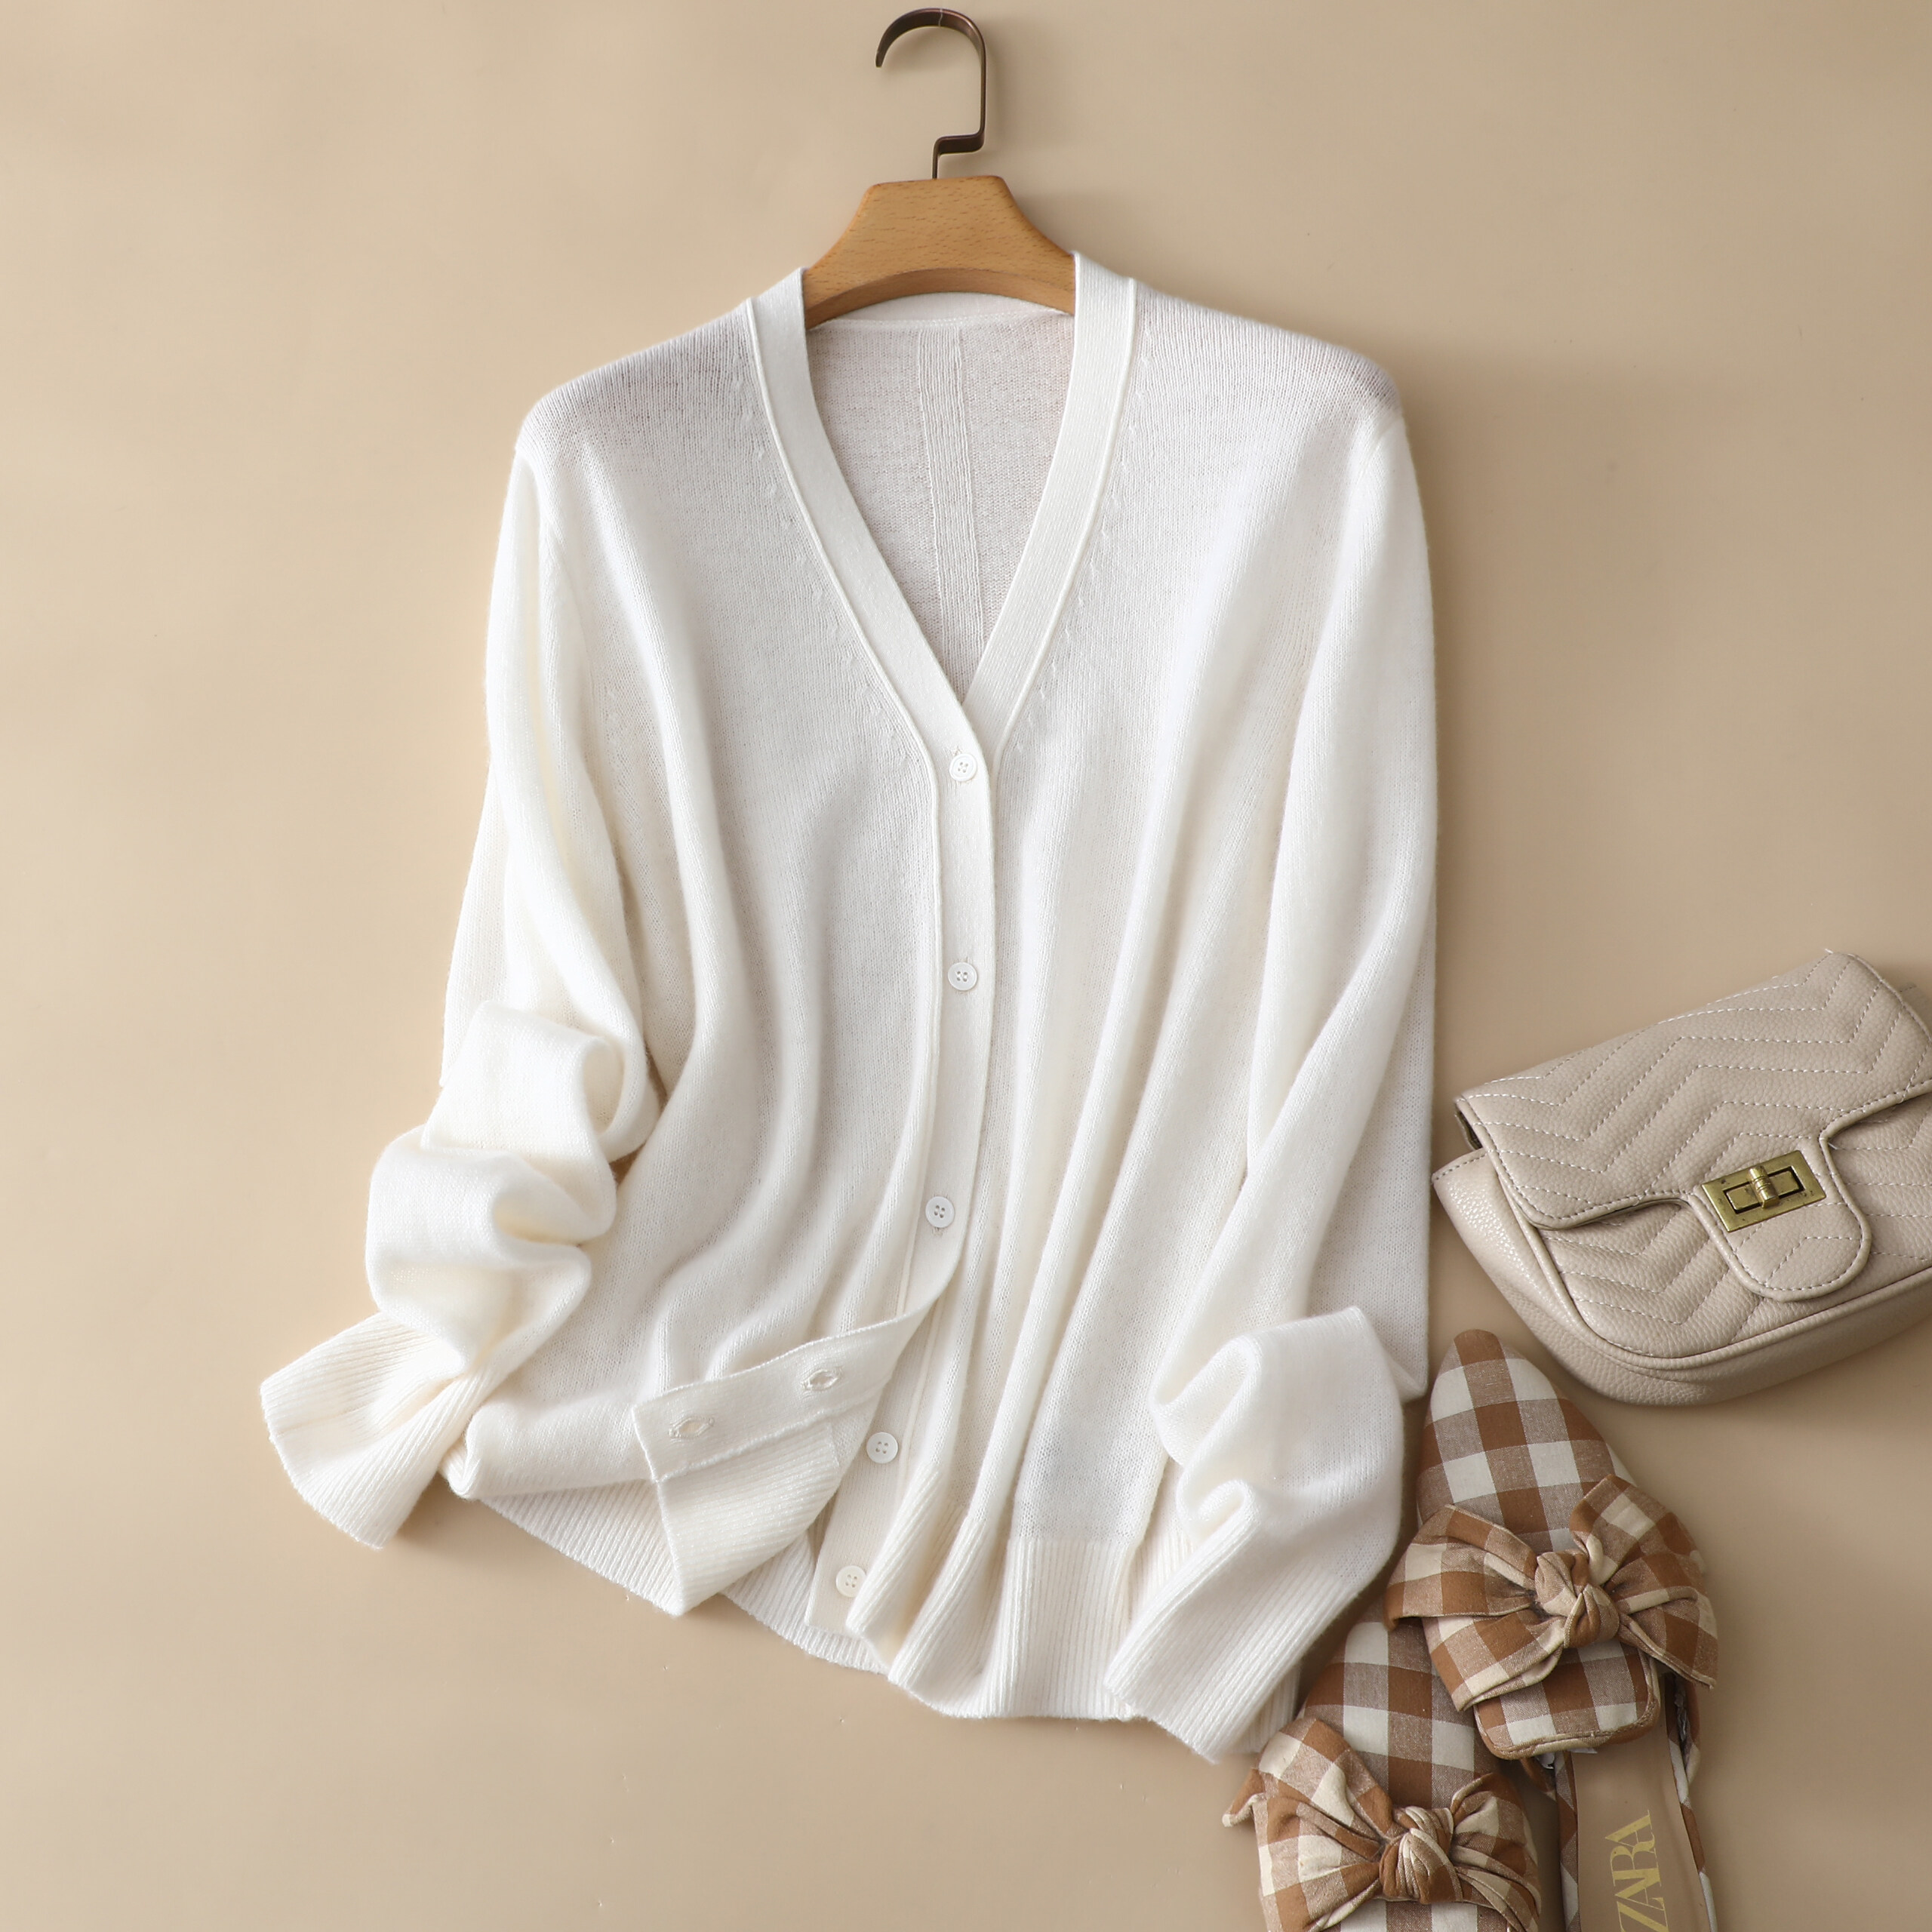 Monochrome Basic Knit Cashmere, Long Sleeve Cashmere, Women Button Cardigan, Cashmere Sweater